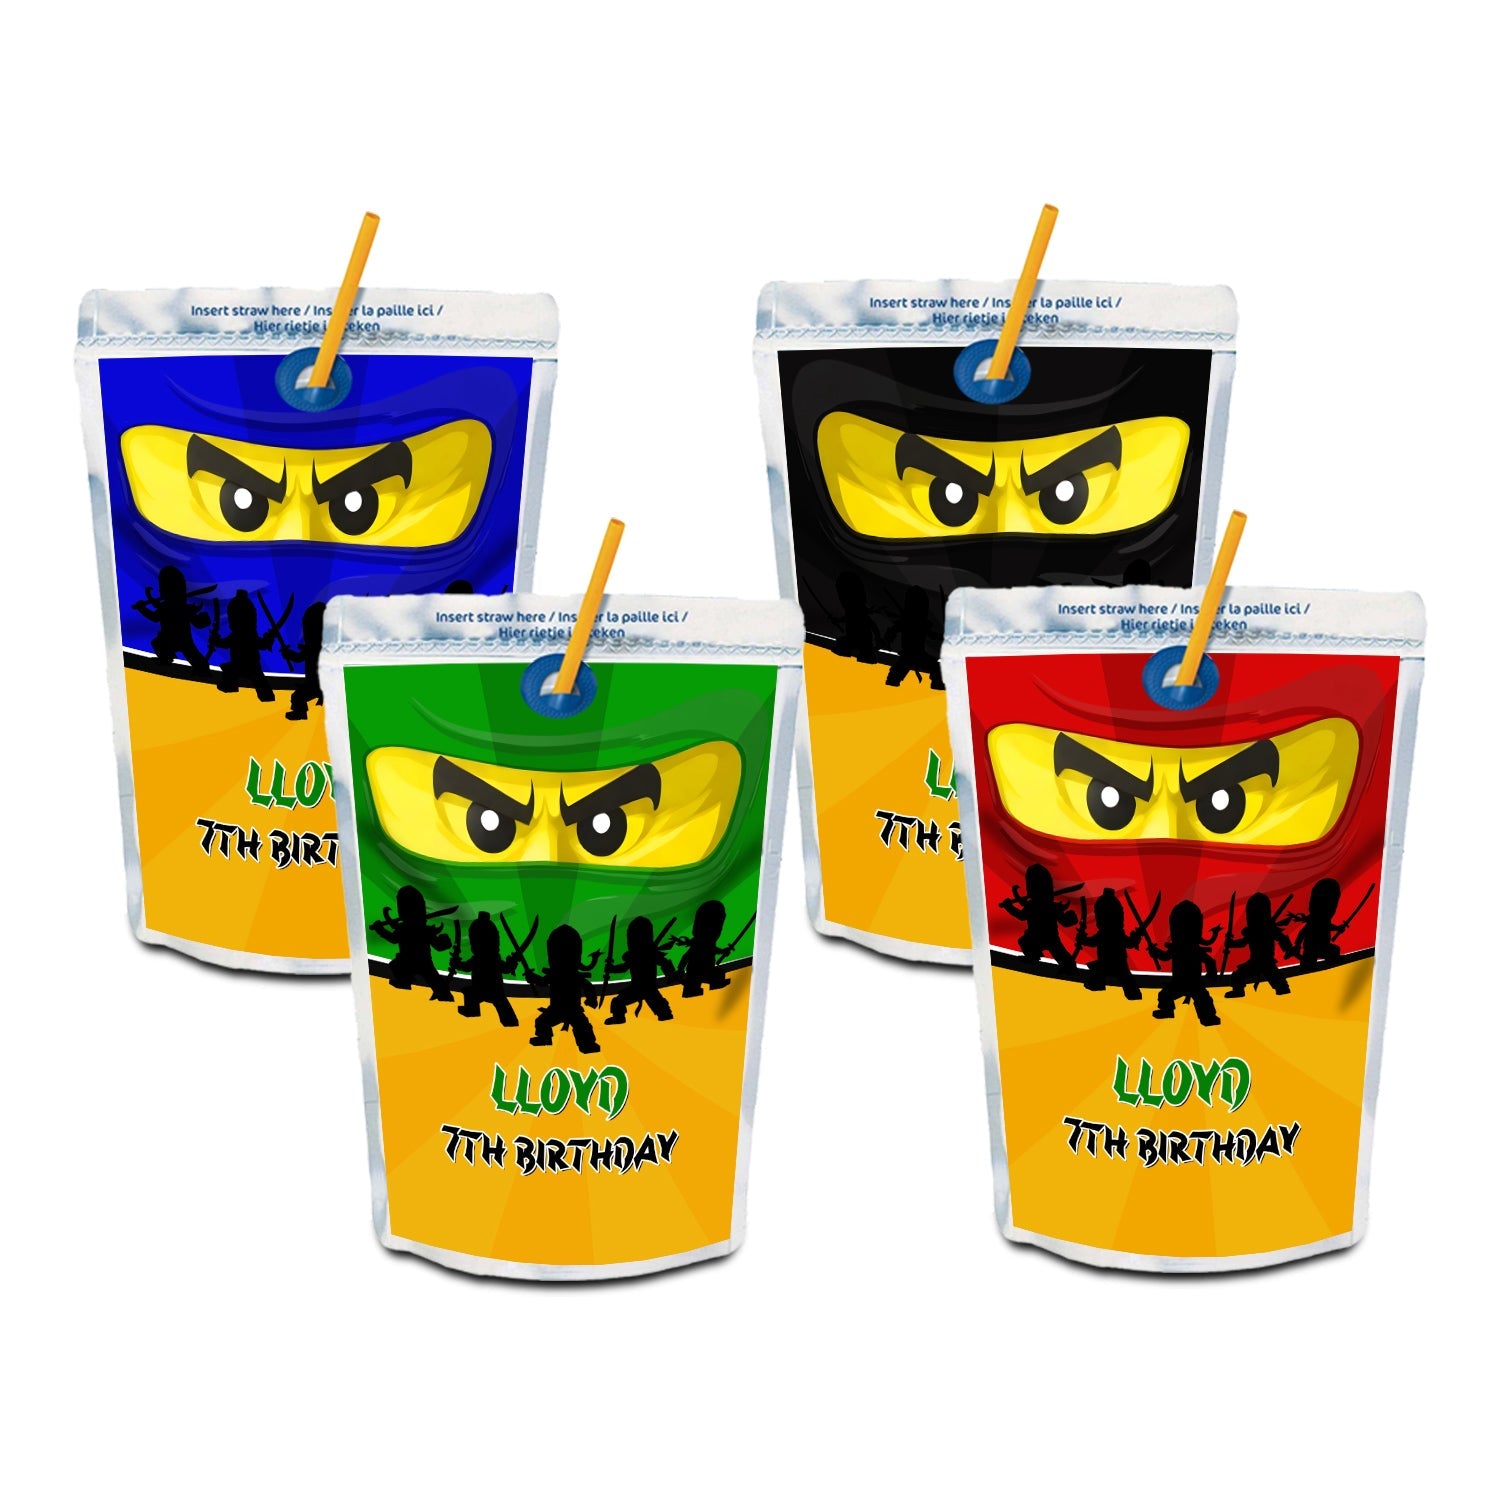 Ninjago themed juice pouch label